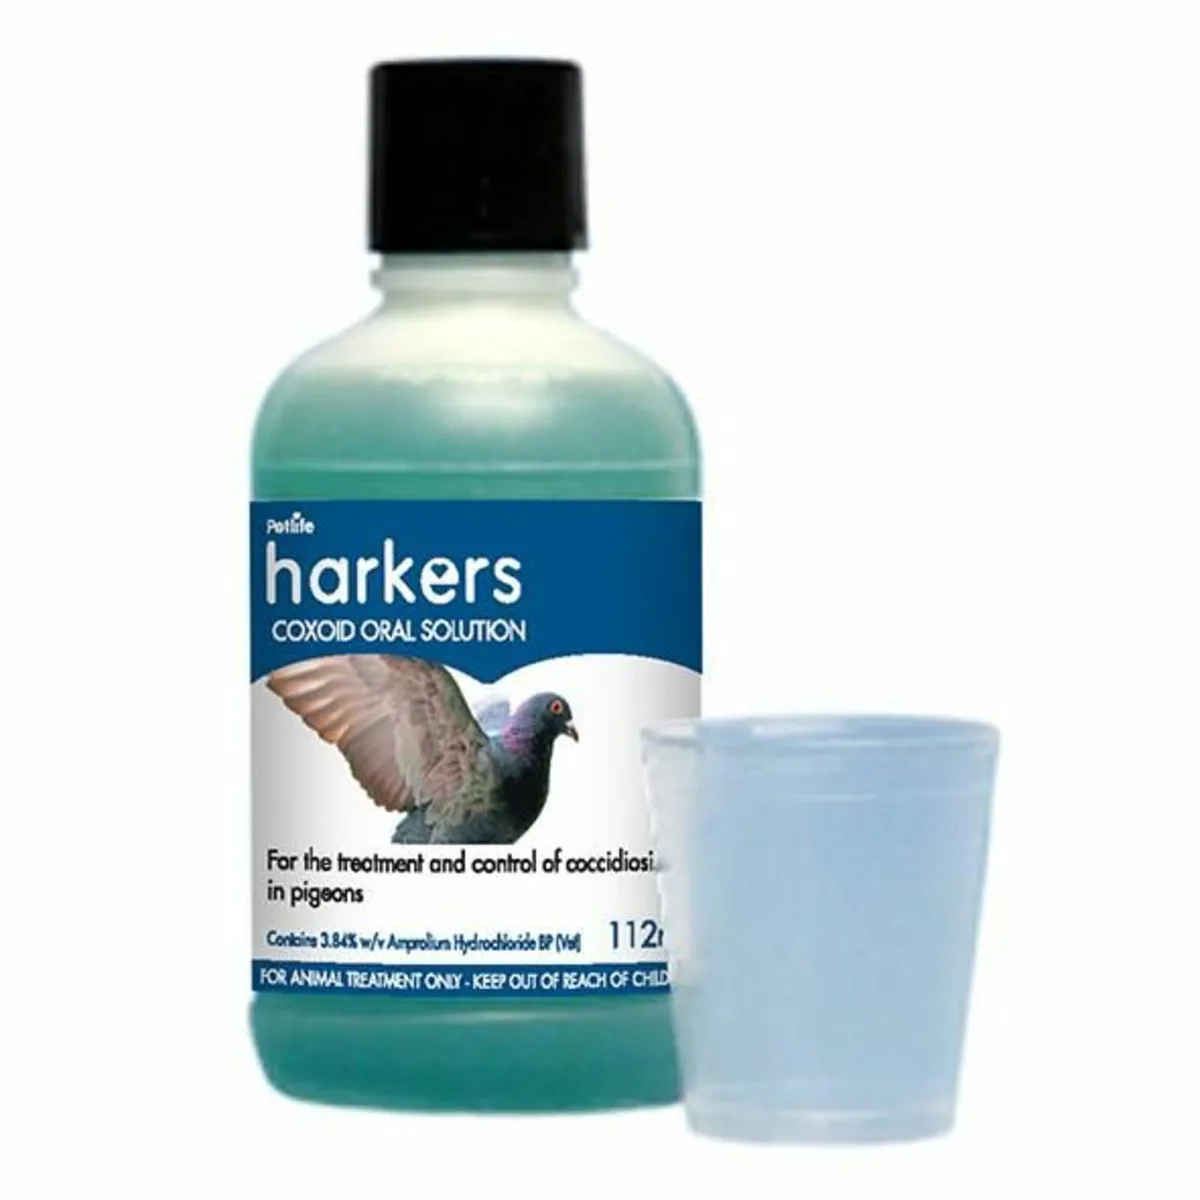 Harkers Bird Treatments & Smite Powders